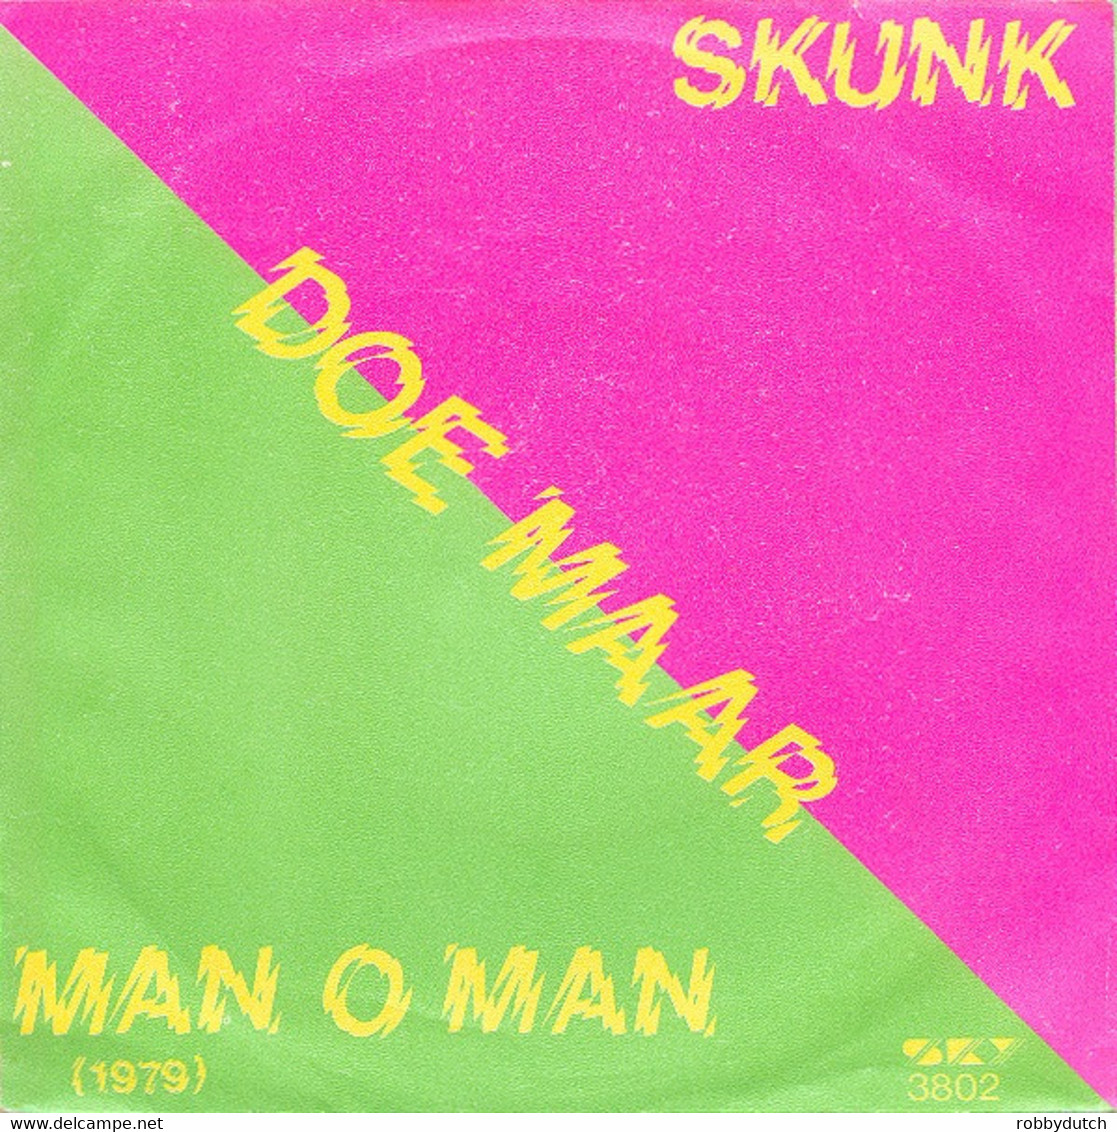 * 7" EP *  DOE MAAR - DE BOM (Holland 1982 NM!!) - Other - Dutch Music